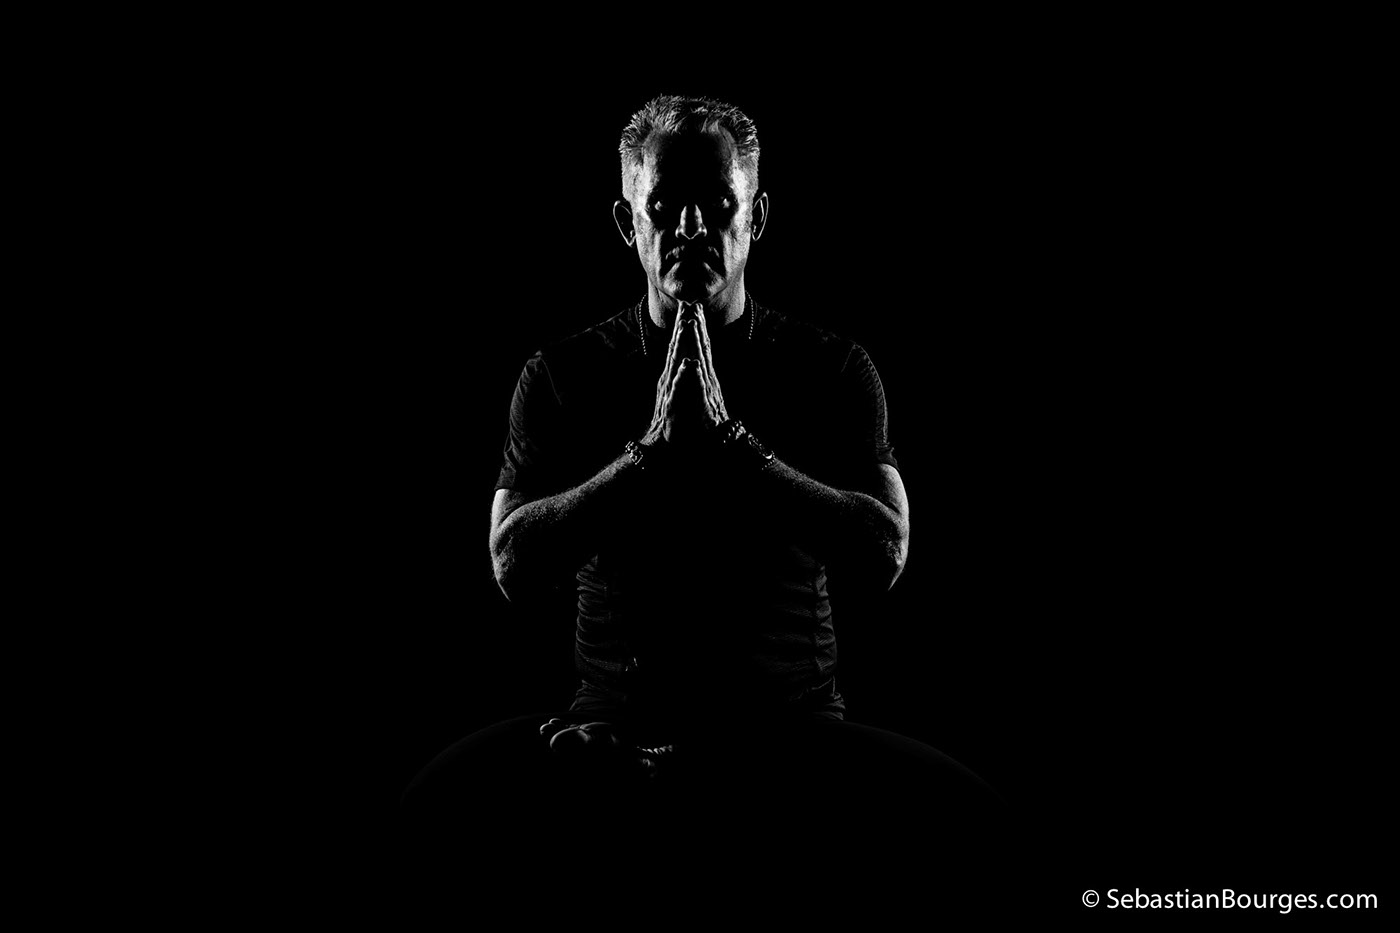 Australia Yoga Academy aya Yoga asanas b&w Silhouettes studio lights black background